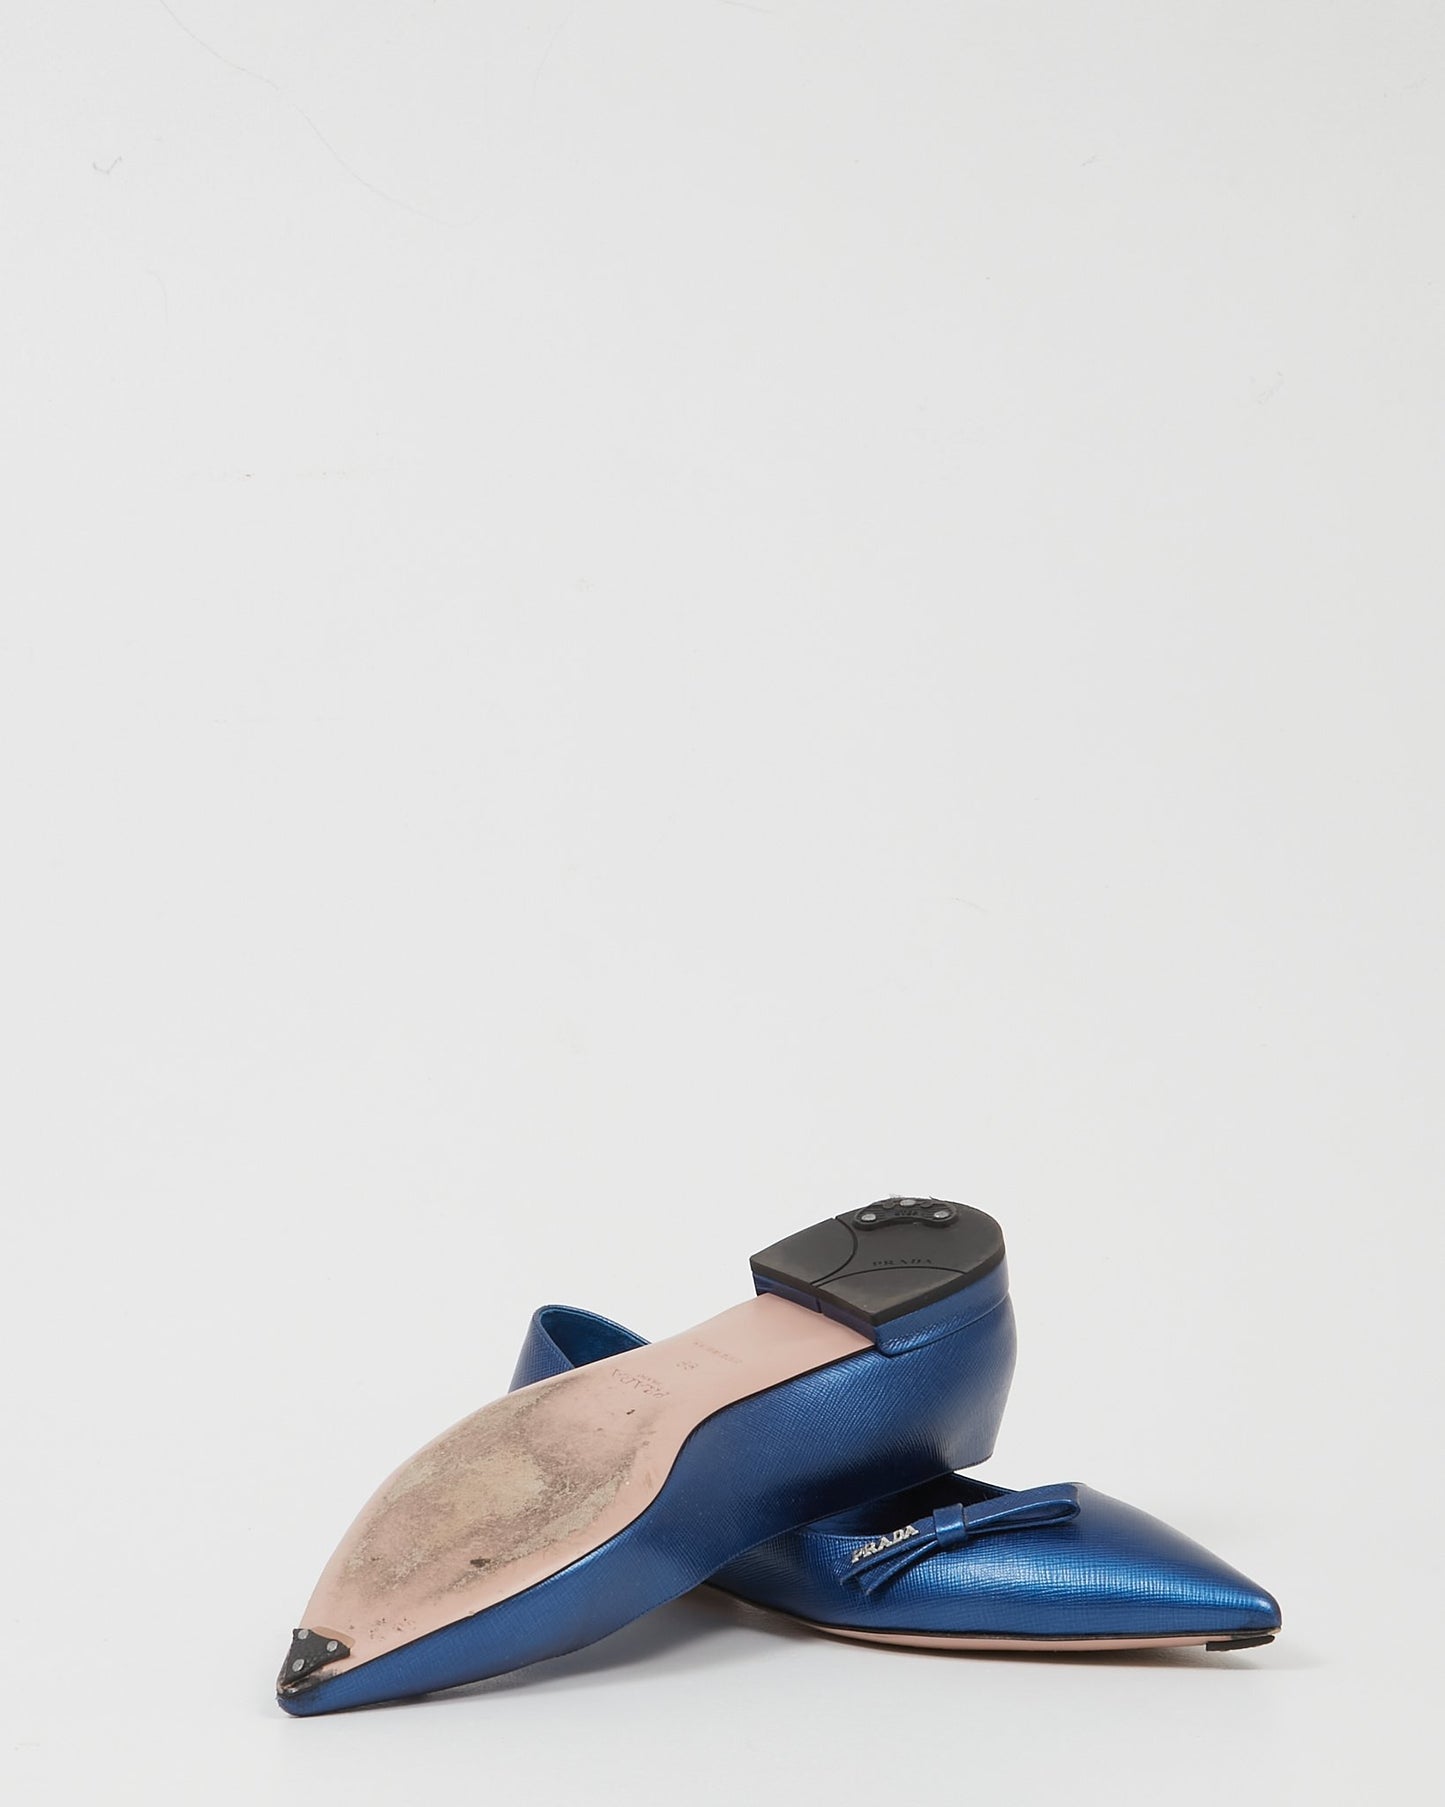 Prada Chaussures plates à bout pointu Saffiano bleu métallisé - 39